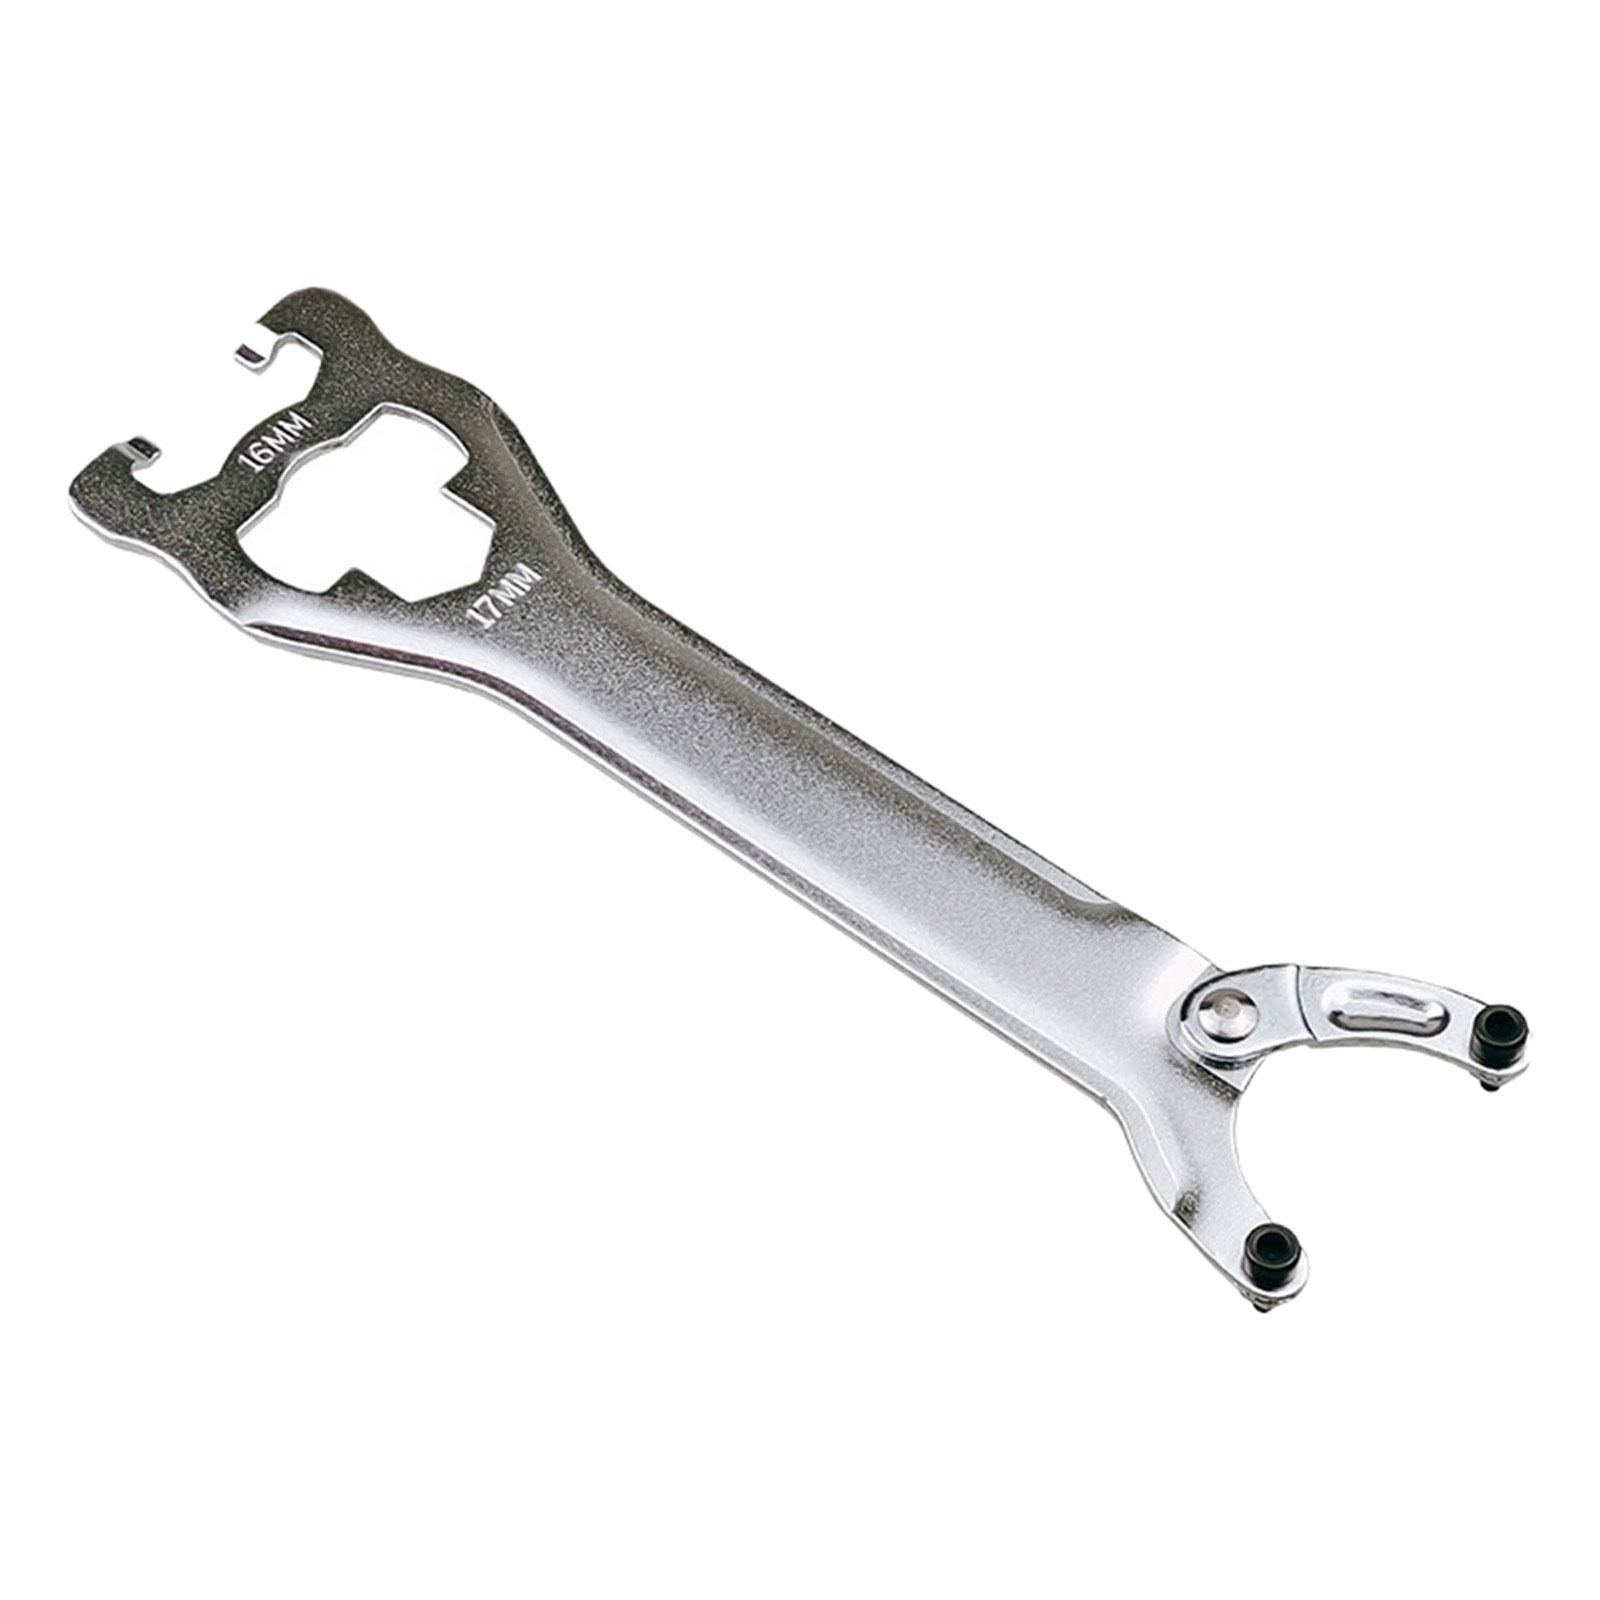 Bottom Bracket Wrench Lock Remover Spanner Double Headed Wrench Tool Steel for Remove Old Bottom Bracket maintenance